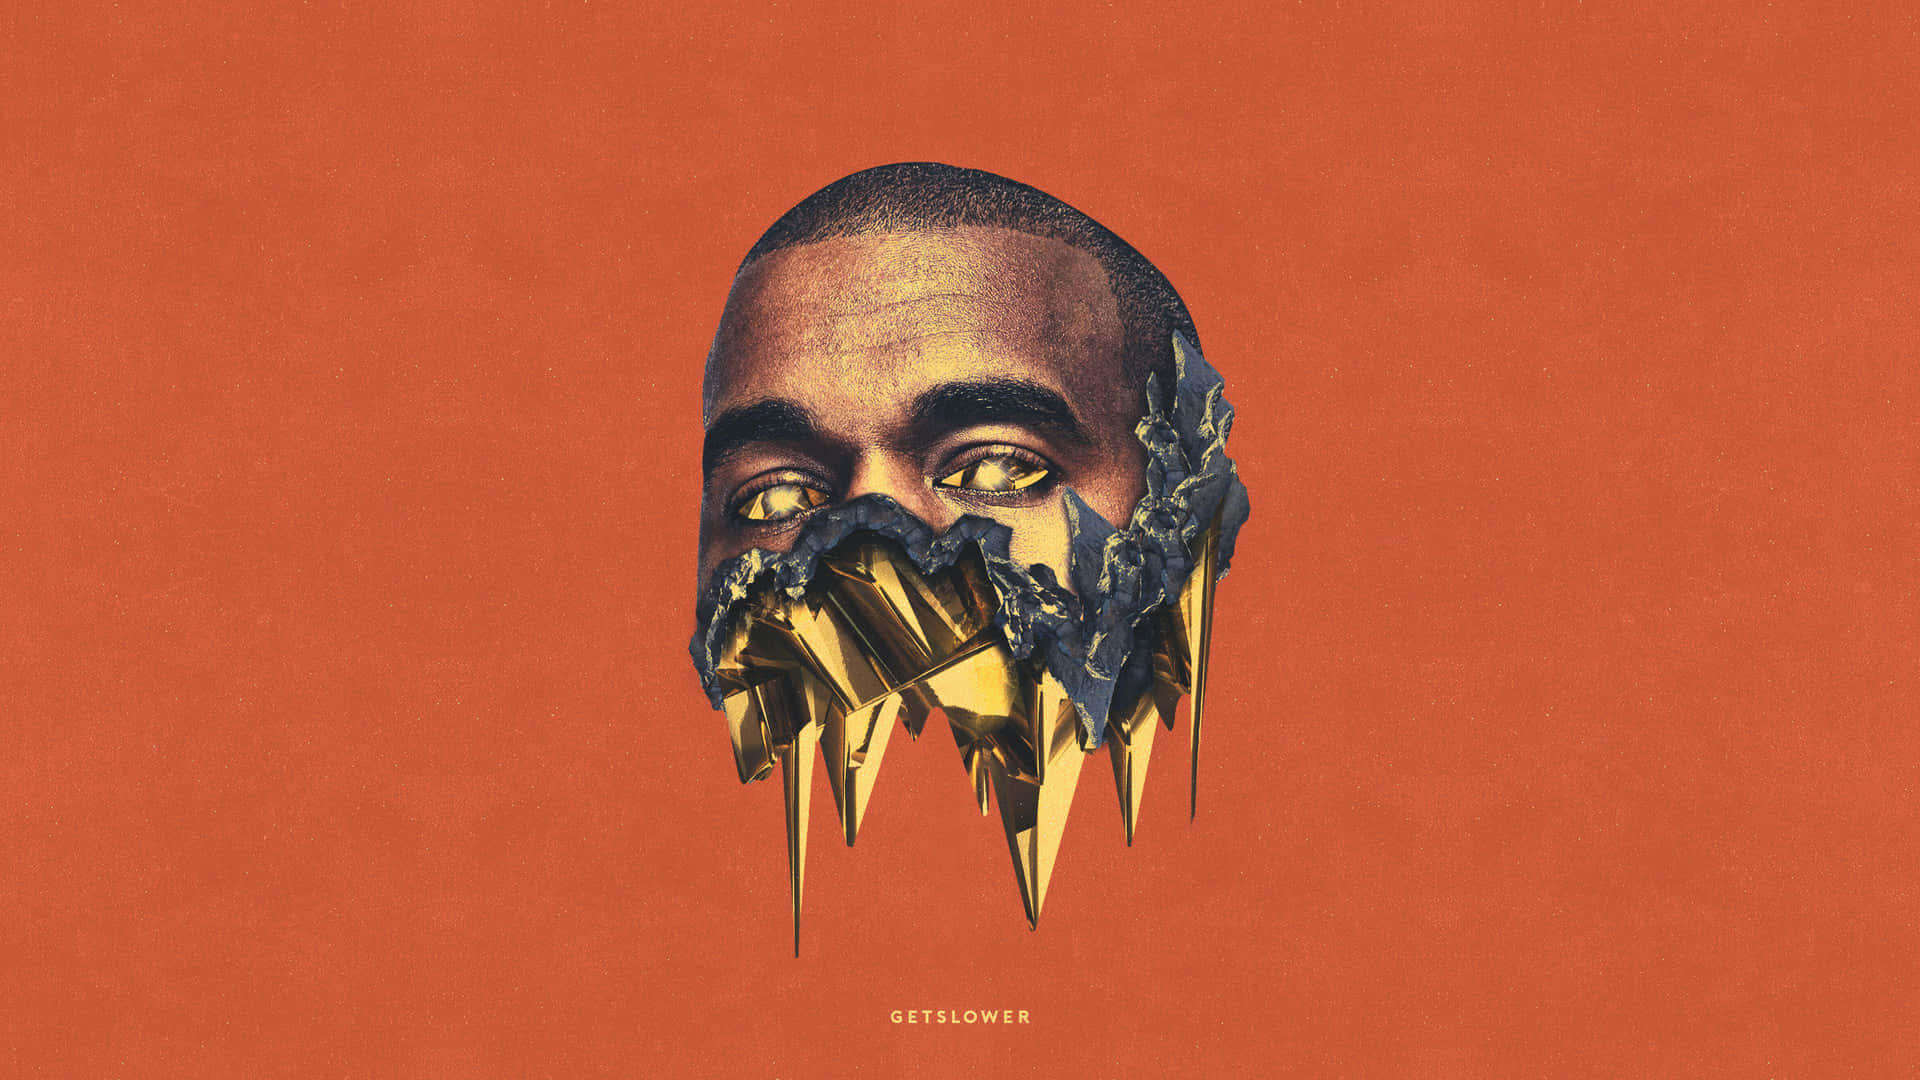 Kanyewest Udgiver Albummet Yeezus. Wallpaper